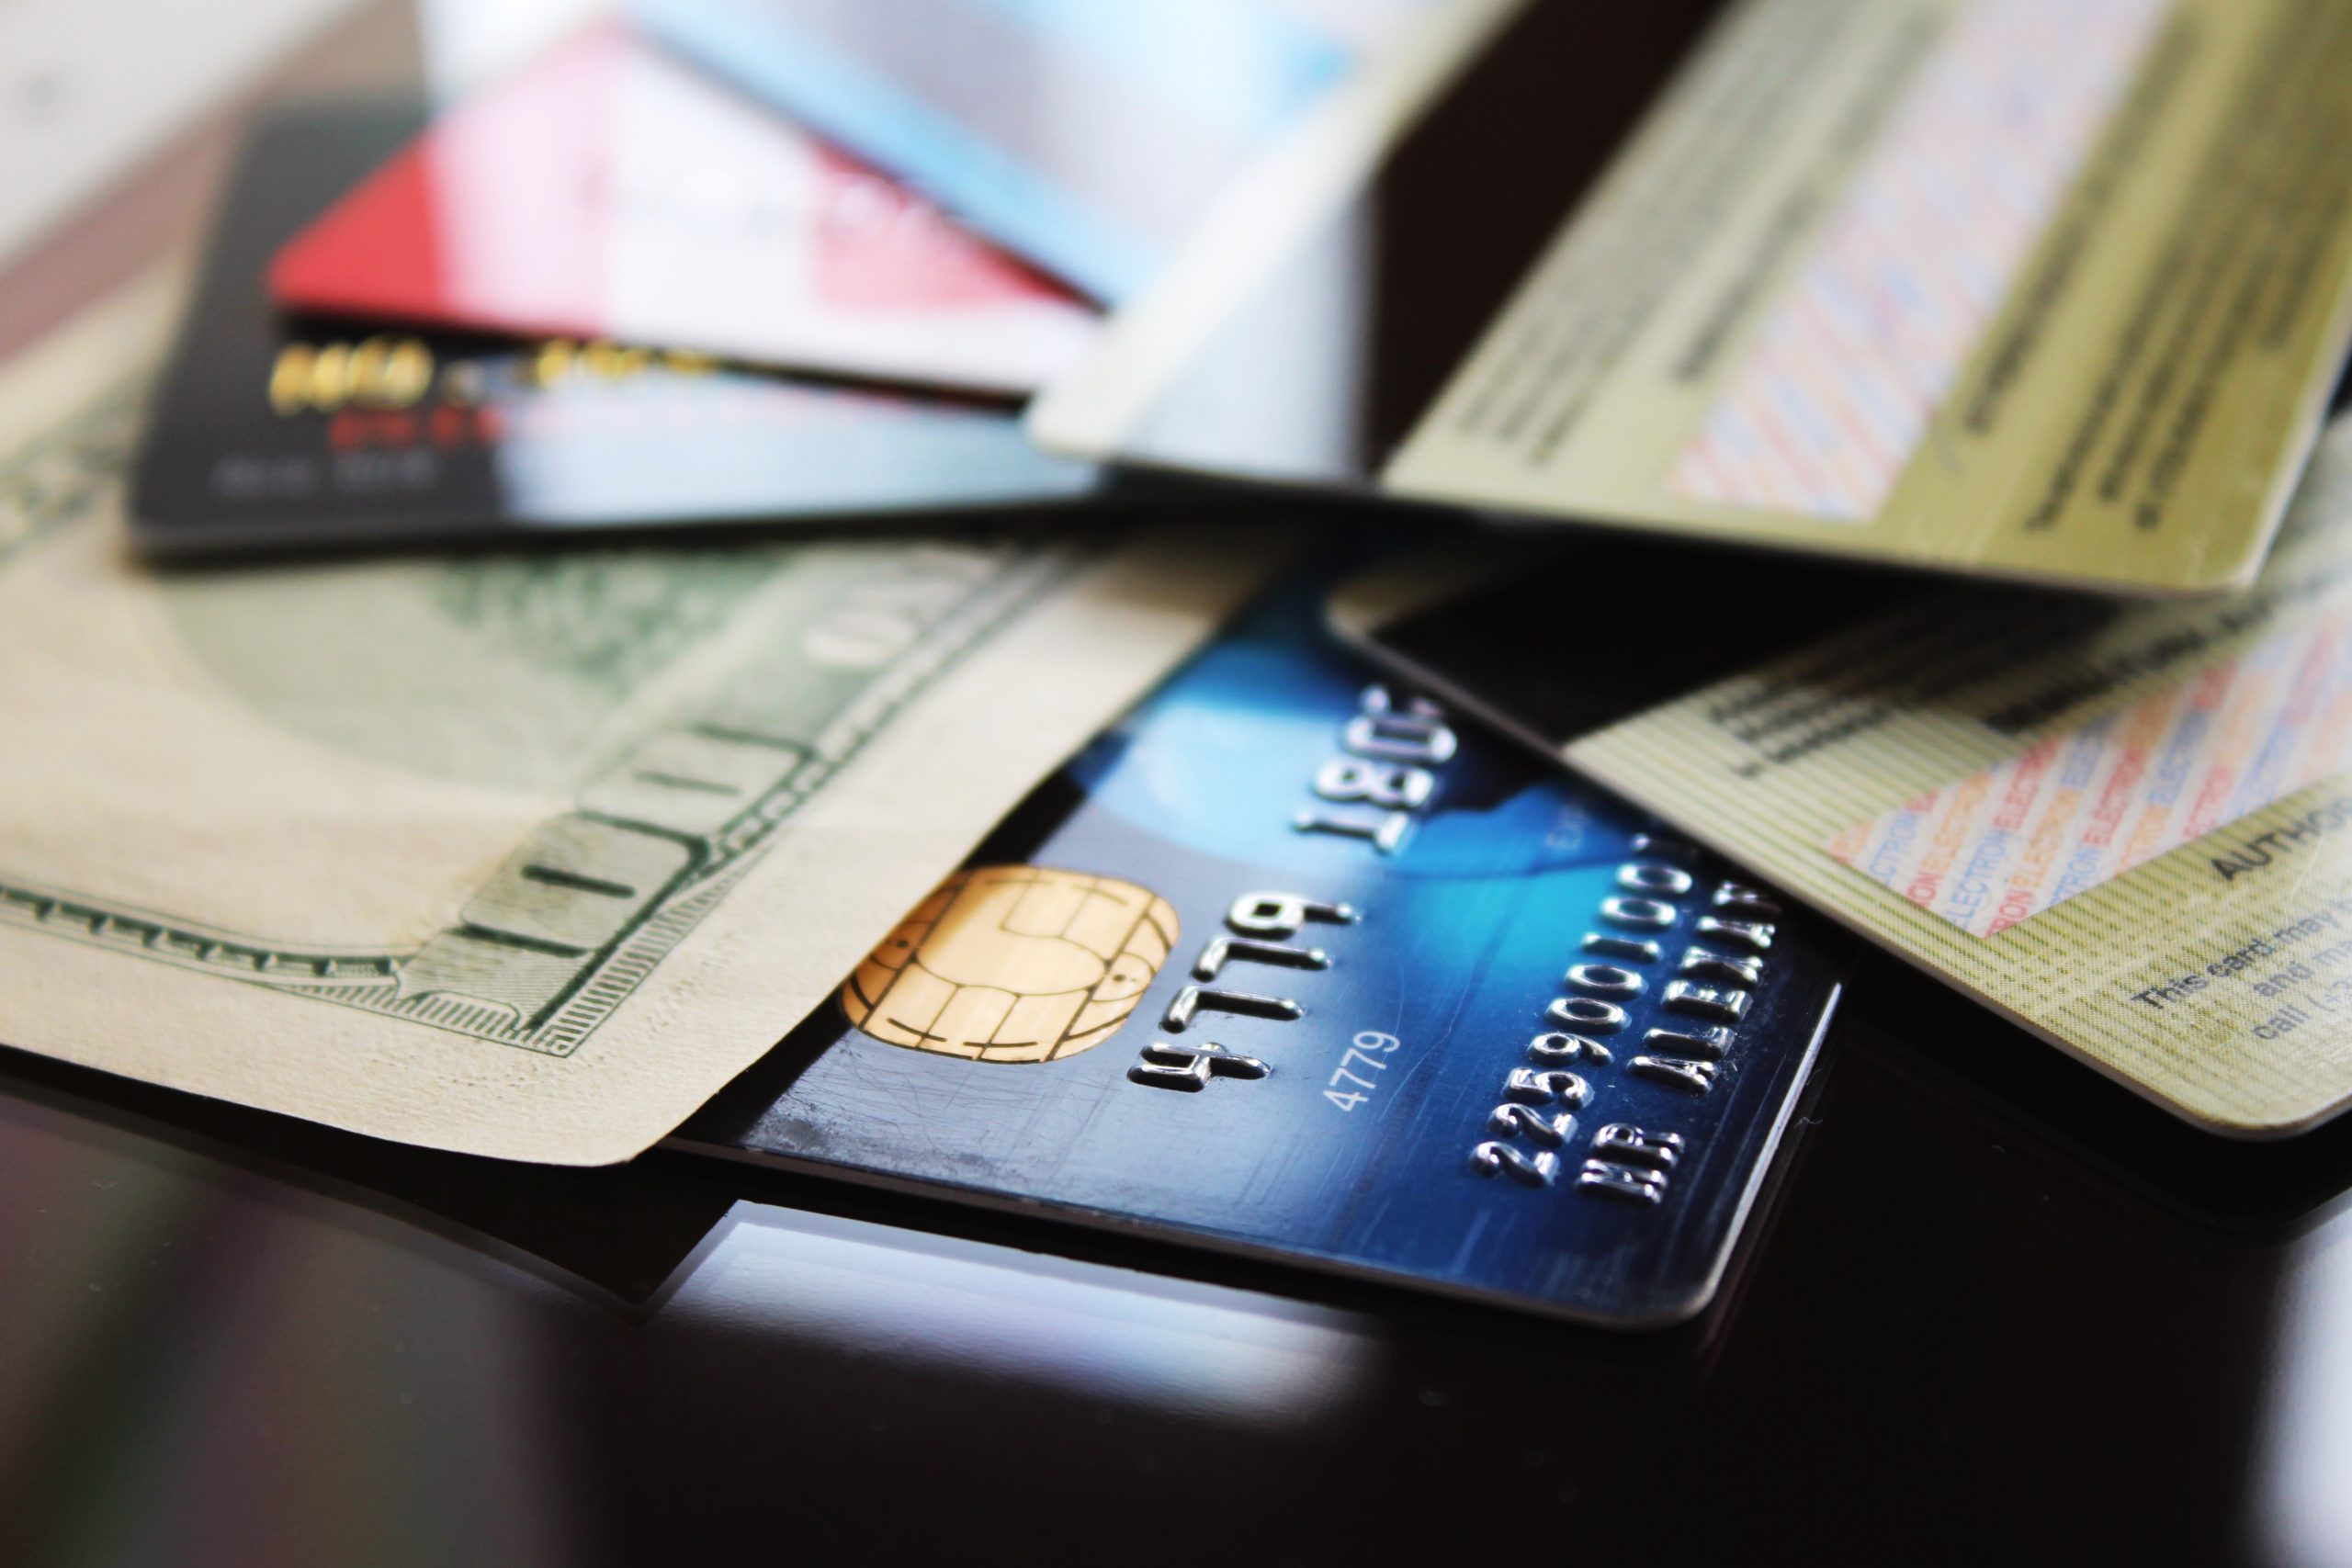 American Credit Card Debt Continues to Soar